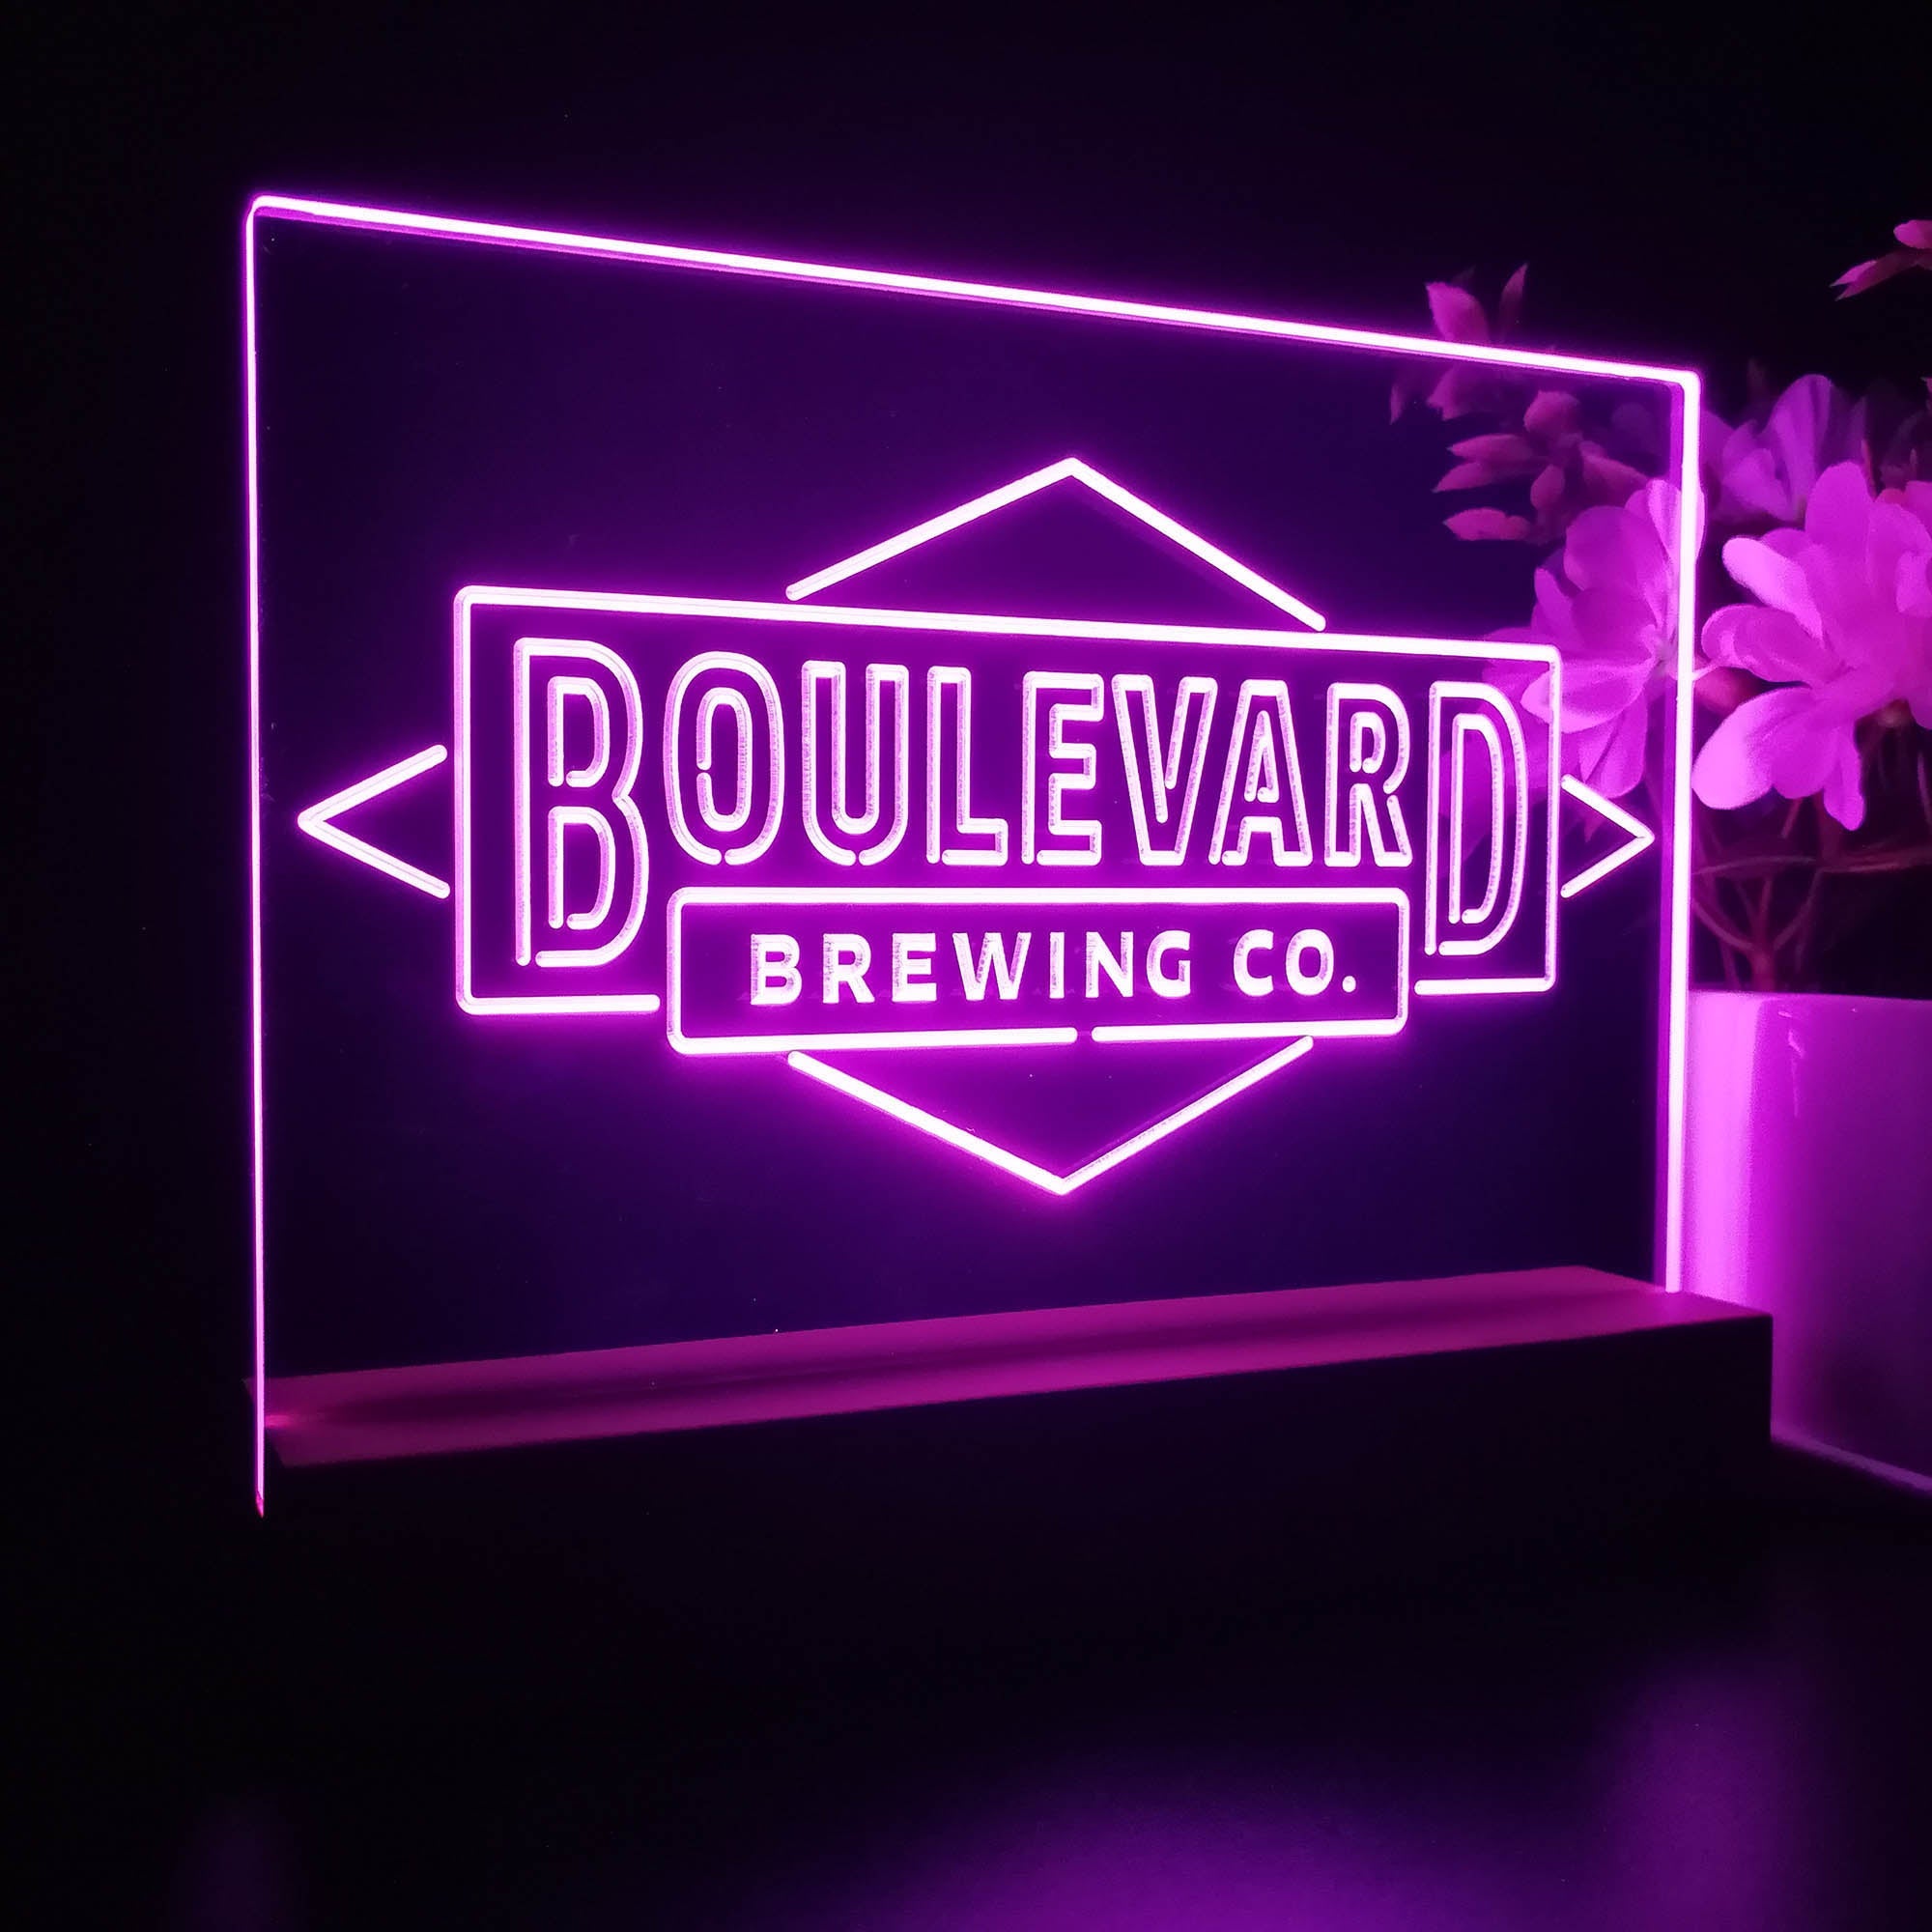 Boulevard Brewing Co. Neon Sign Pub Bar Decor Lamp